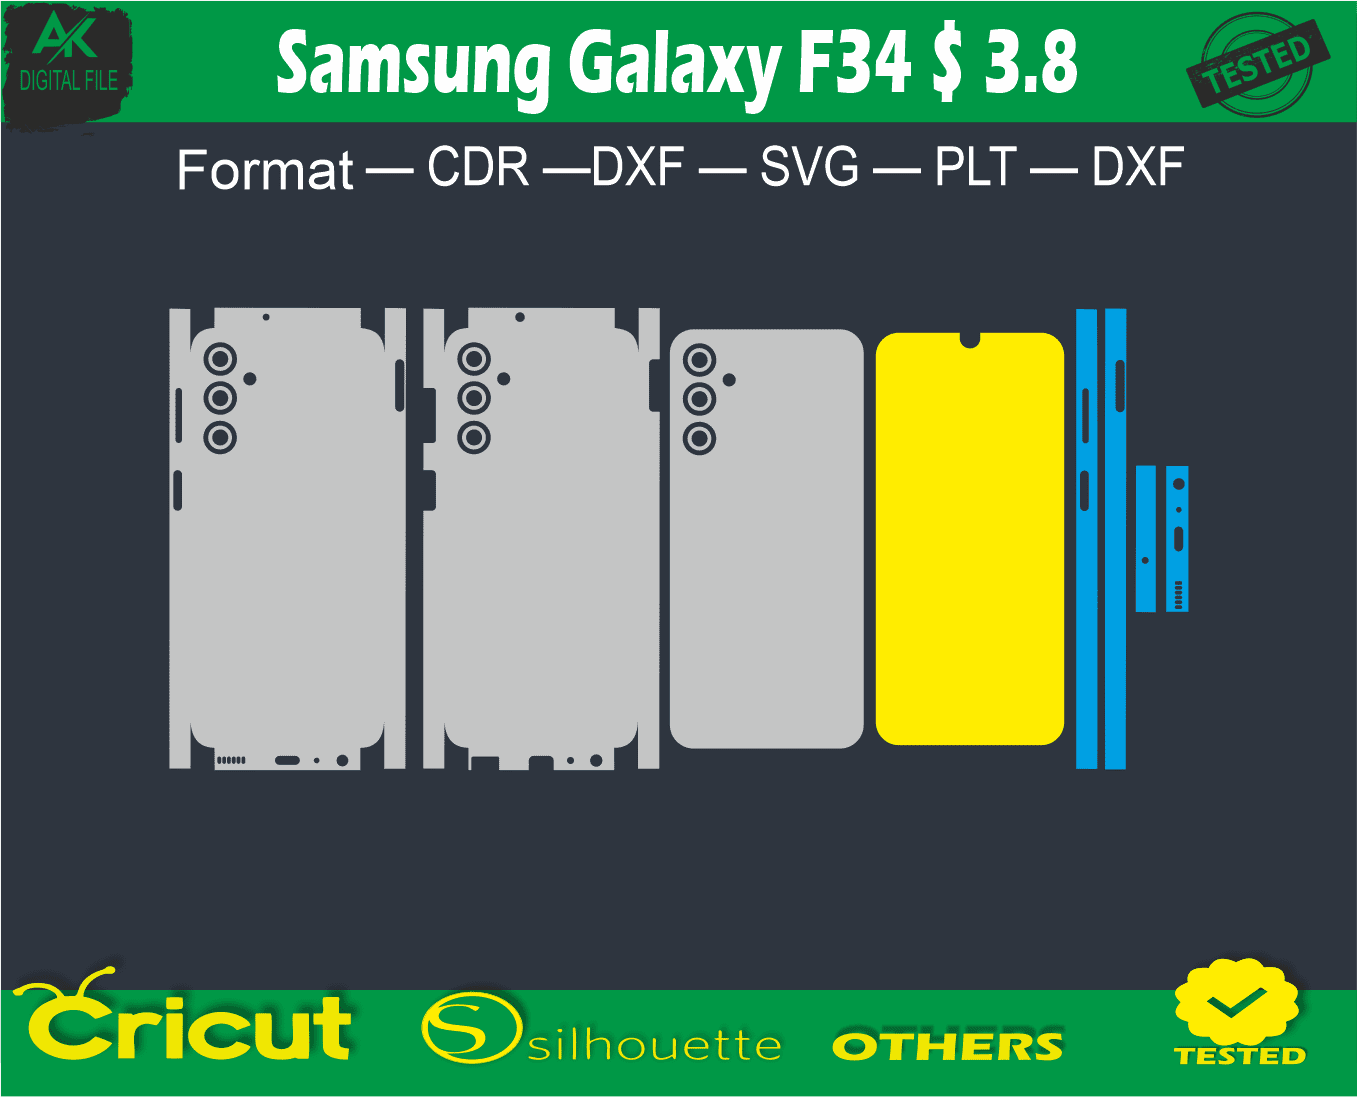 Samsung Galaxy F34 $ 3.8